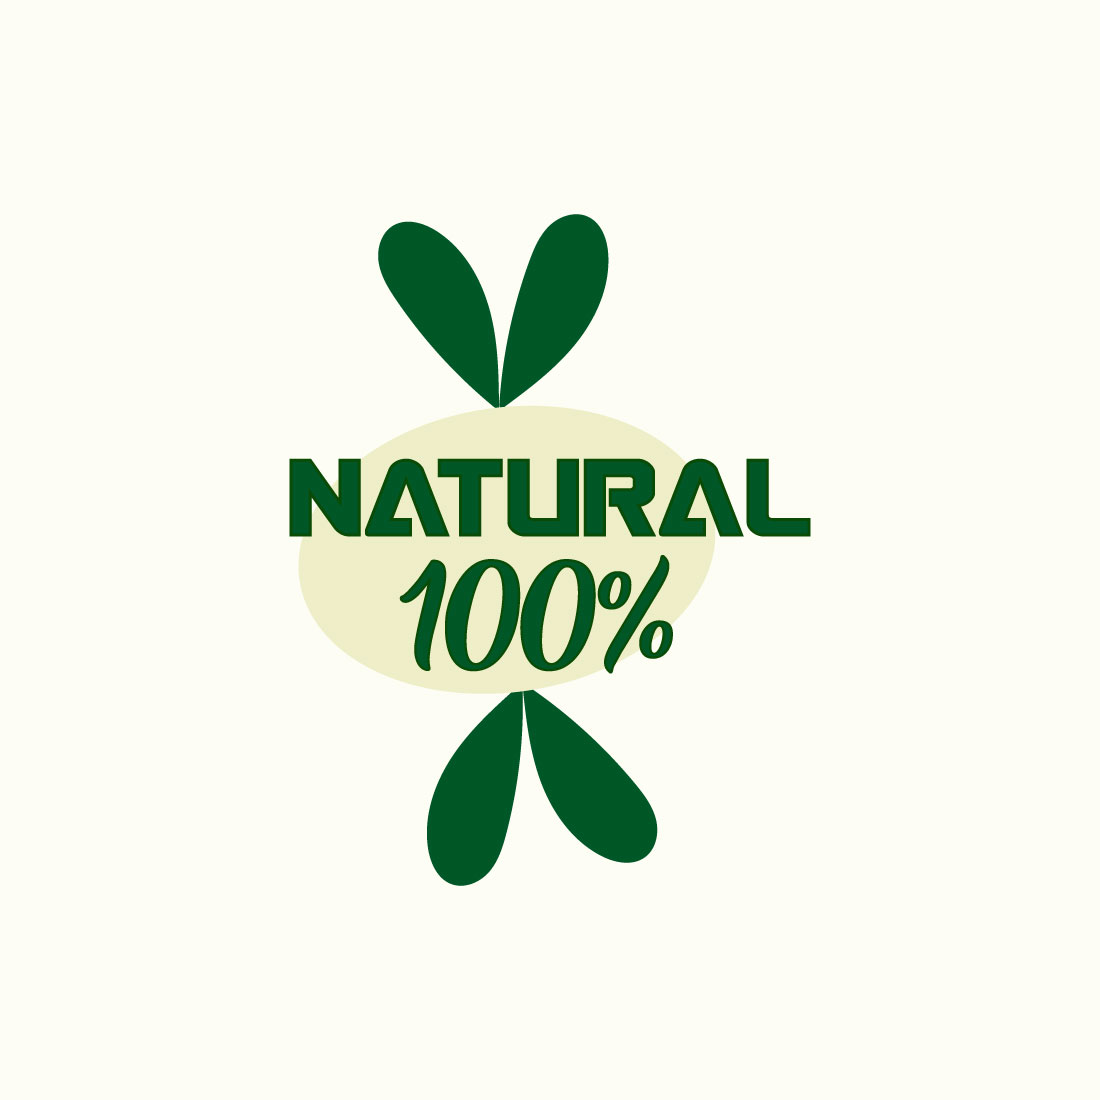 Free herbal medicine logo cover image.